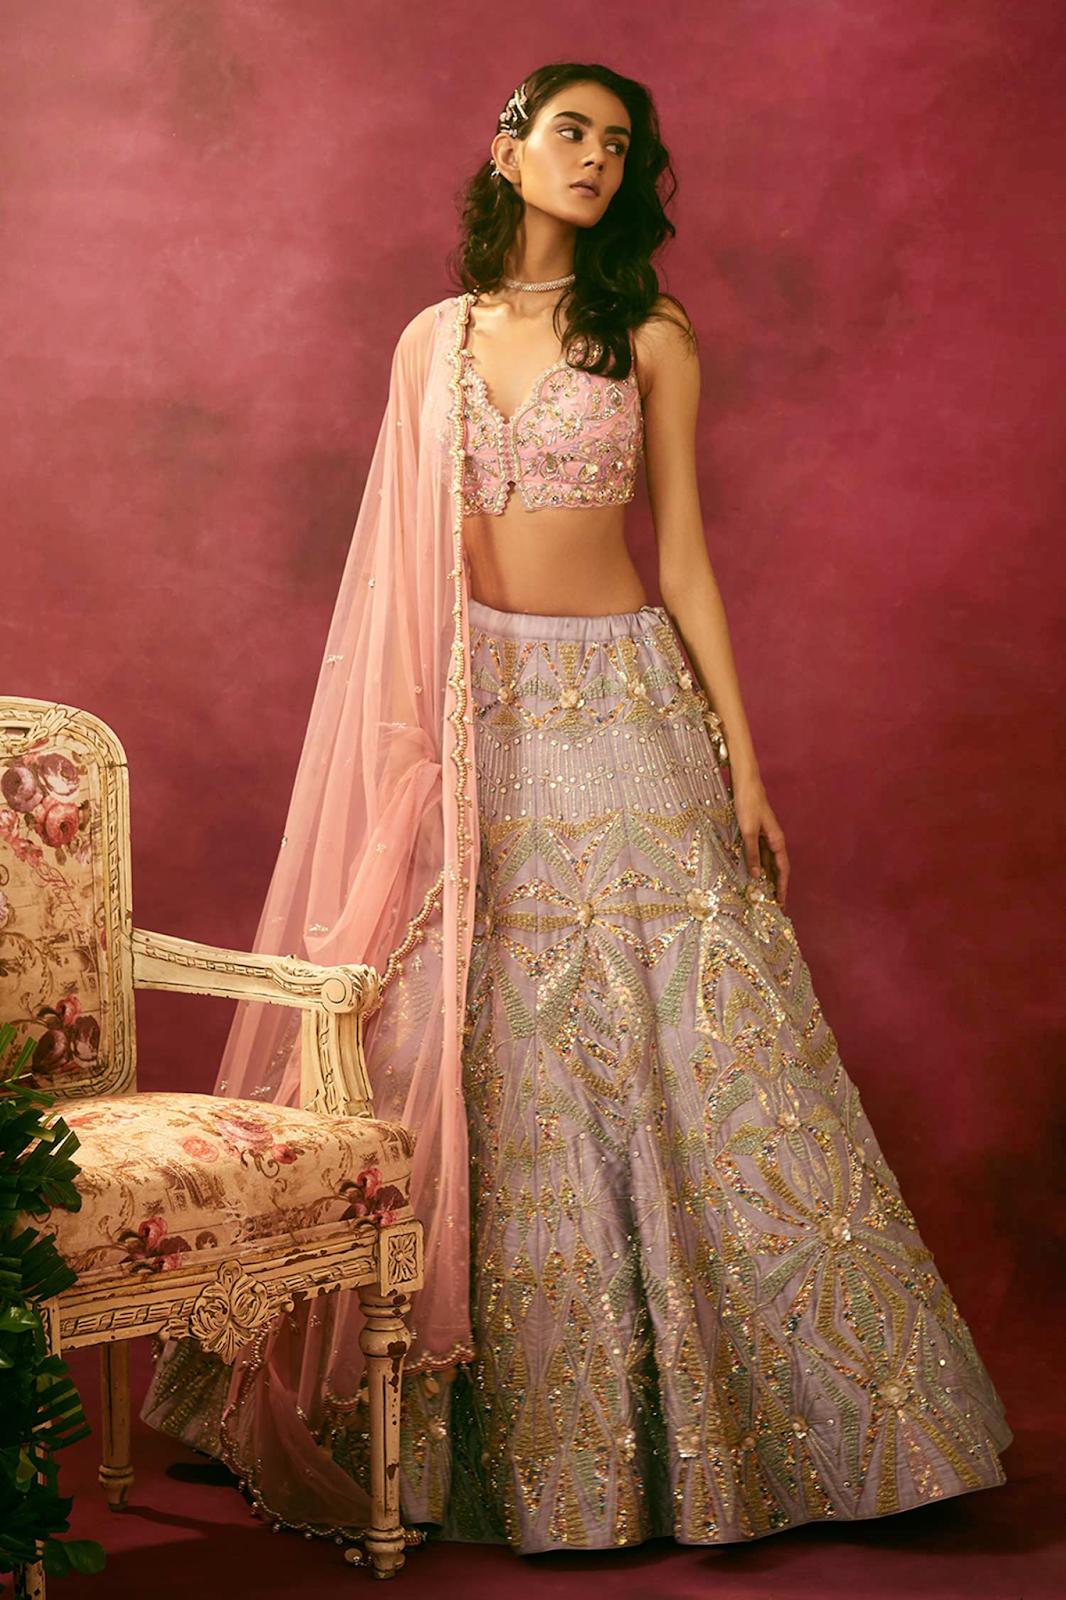 Fun Delhi Wedding With An Exquisite Blush Pink Bridal Lehenga | Sabyasachi  lehenga, Bridal outfits, Indian bridal outfits